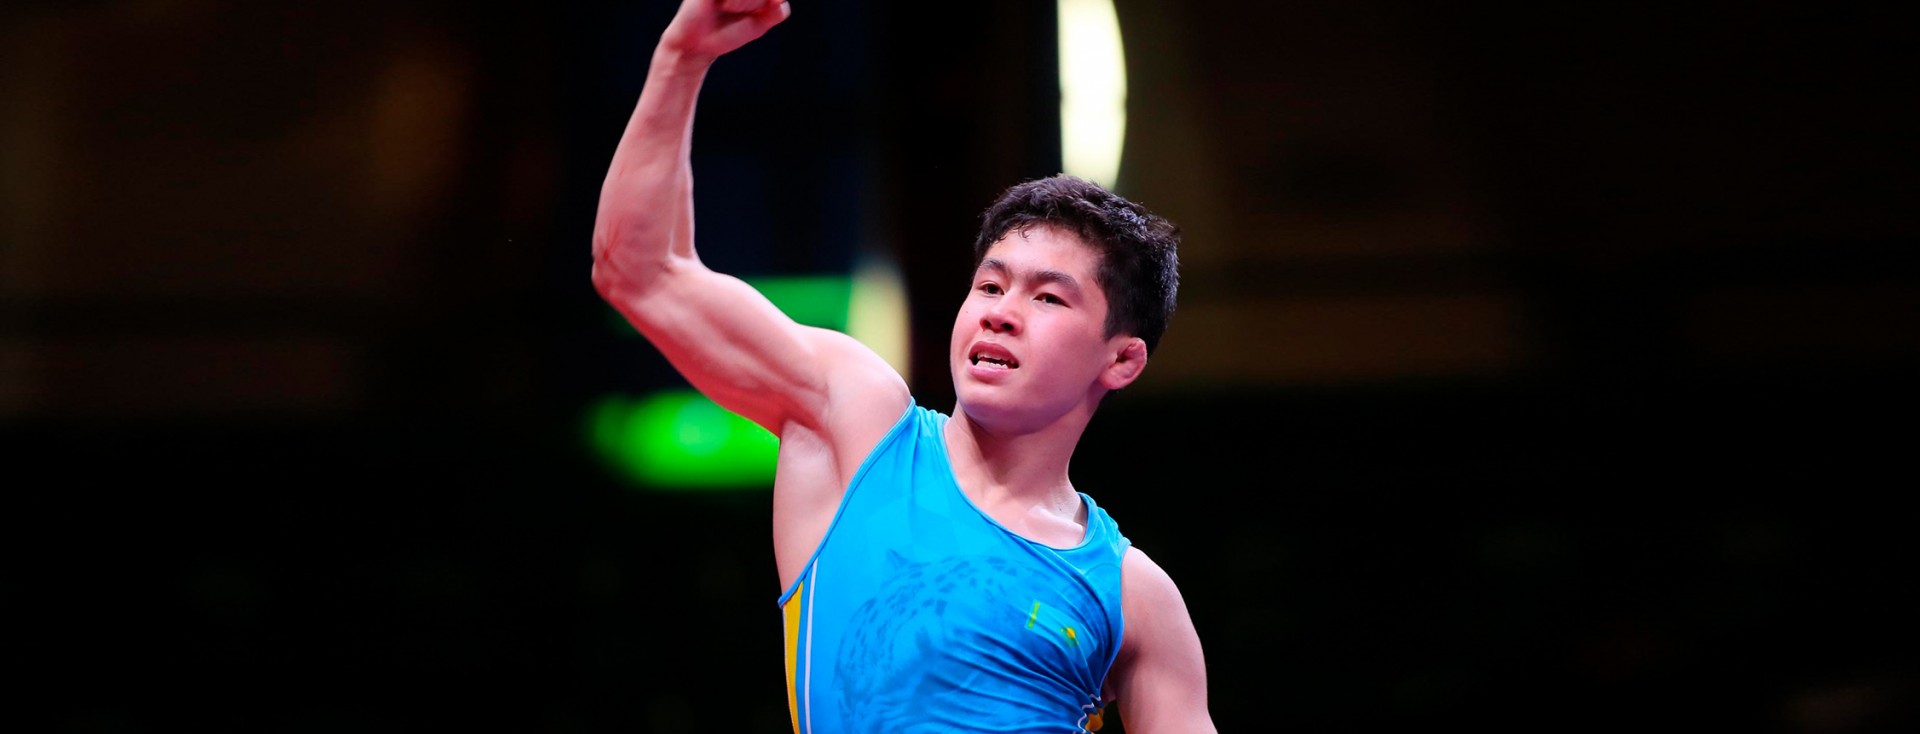 Astana will host 2019 Senior Wrestling World Championships